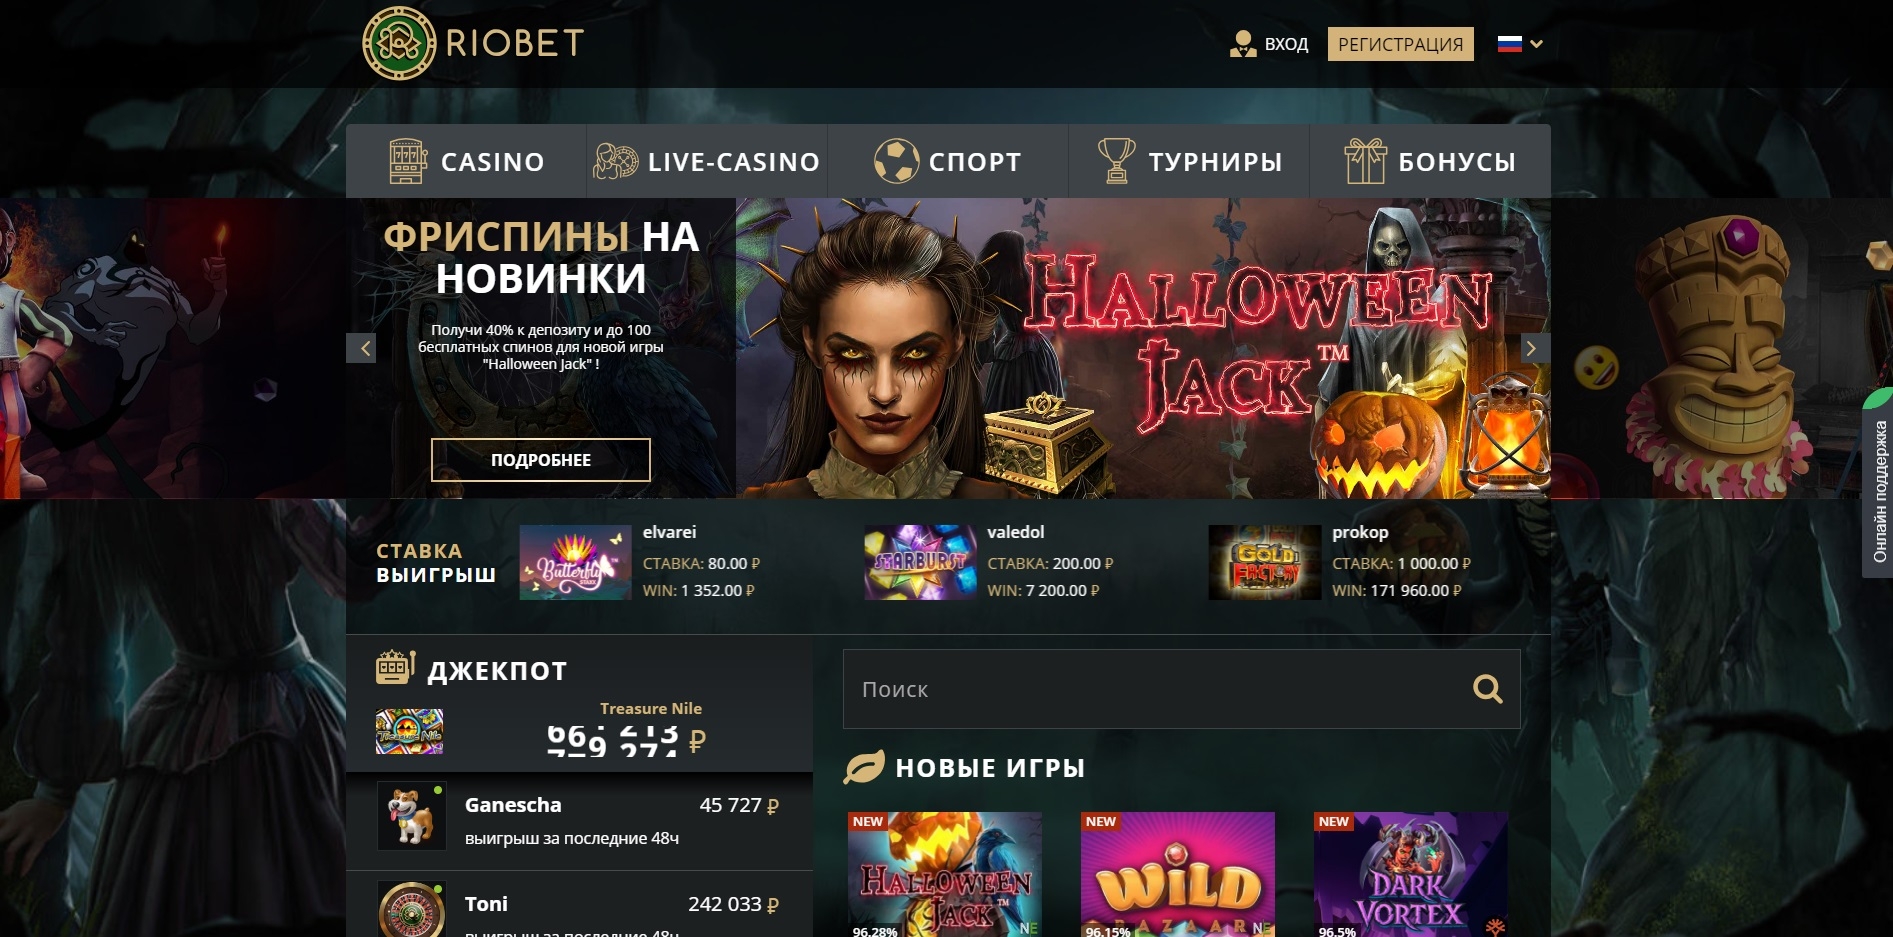 Riobet casino online ru ставки на спорт в сша